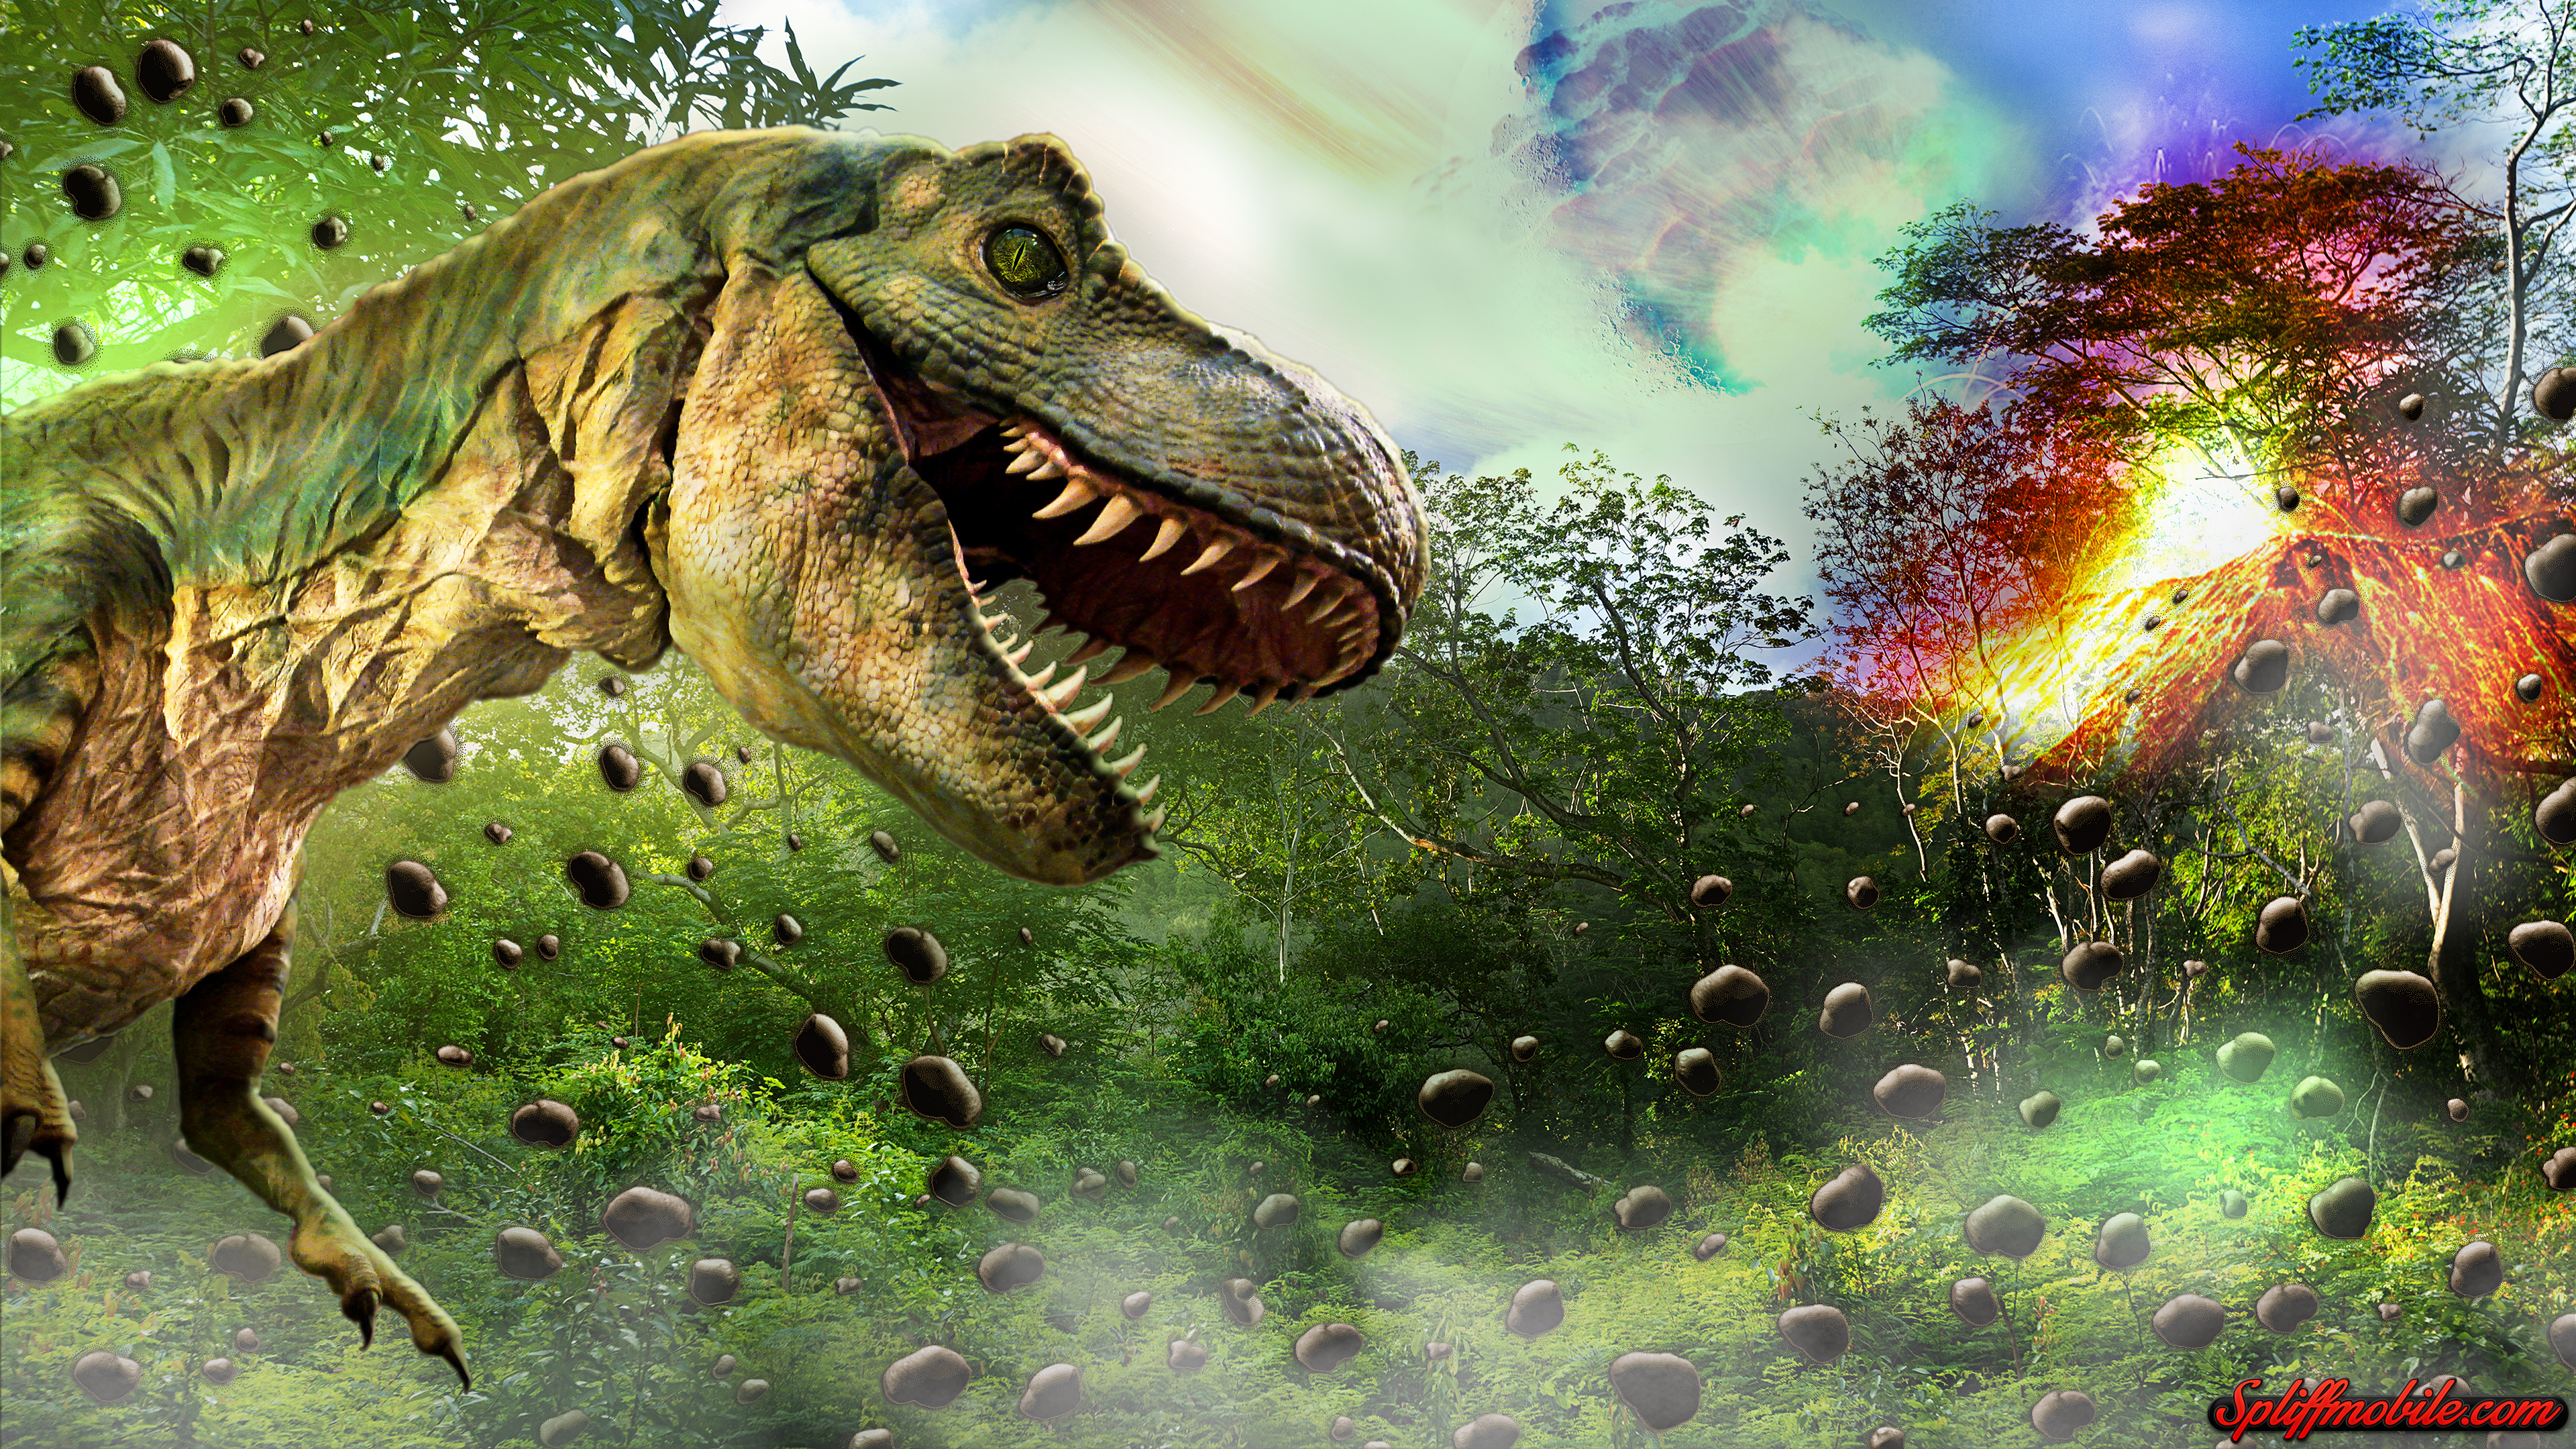 dini wallpaper,dinosaur,tyrannosaurus,velociraptor,extinction,adaptation